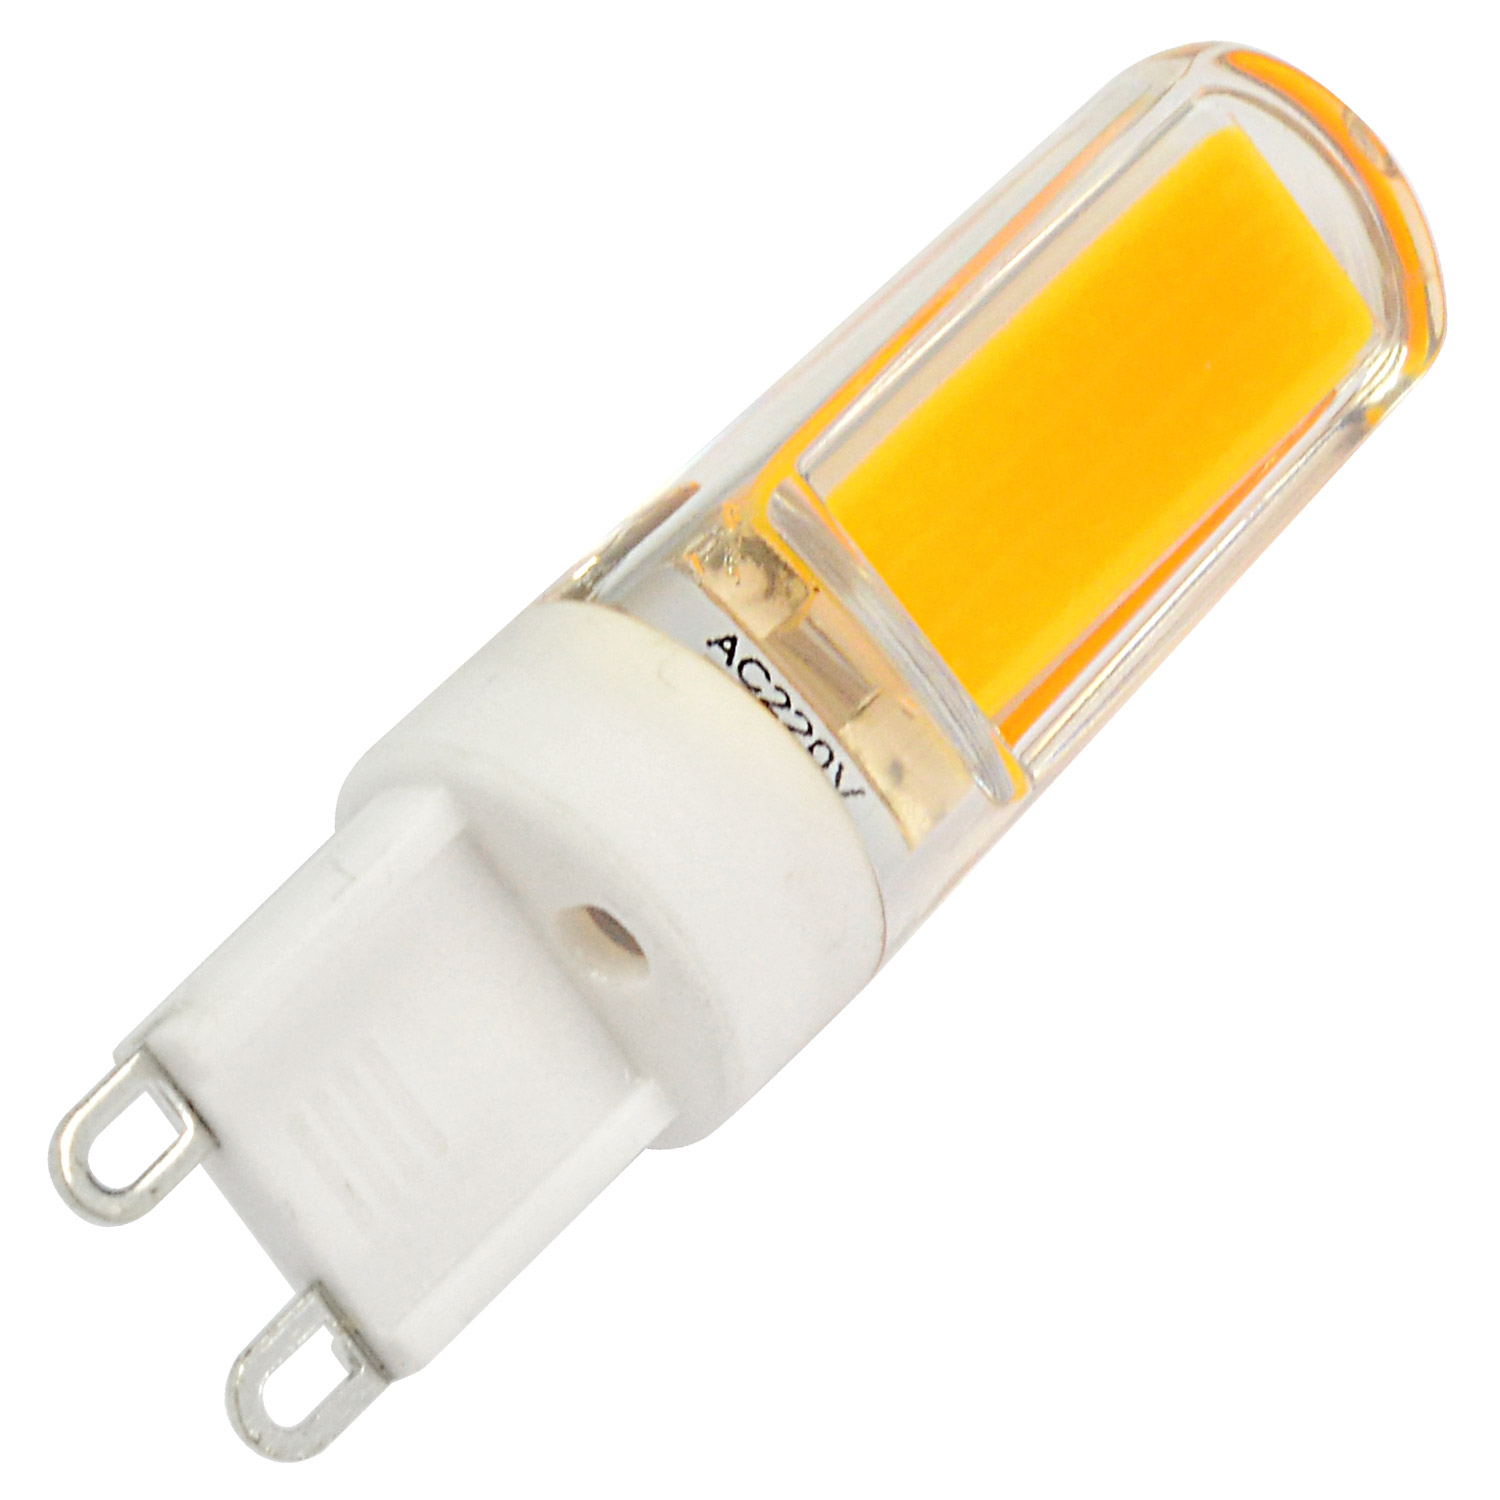 Mengsled Mengs® G9 3w Led Light Cob Led Bulb Lamp In Warm Whitecool